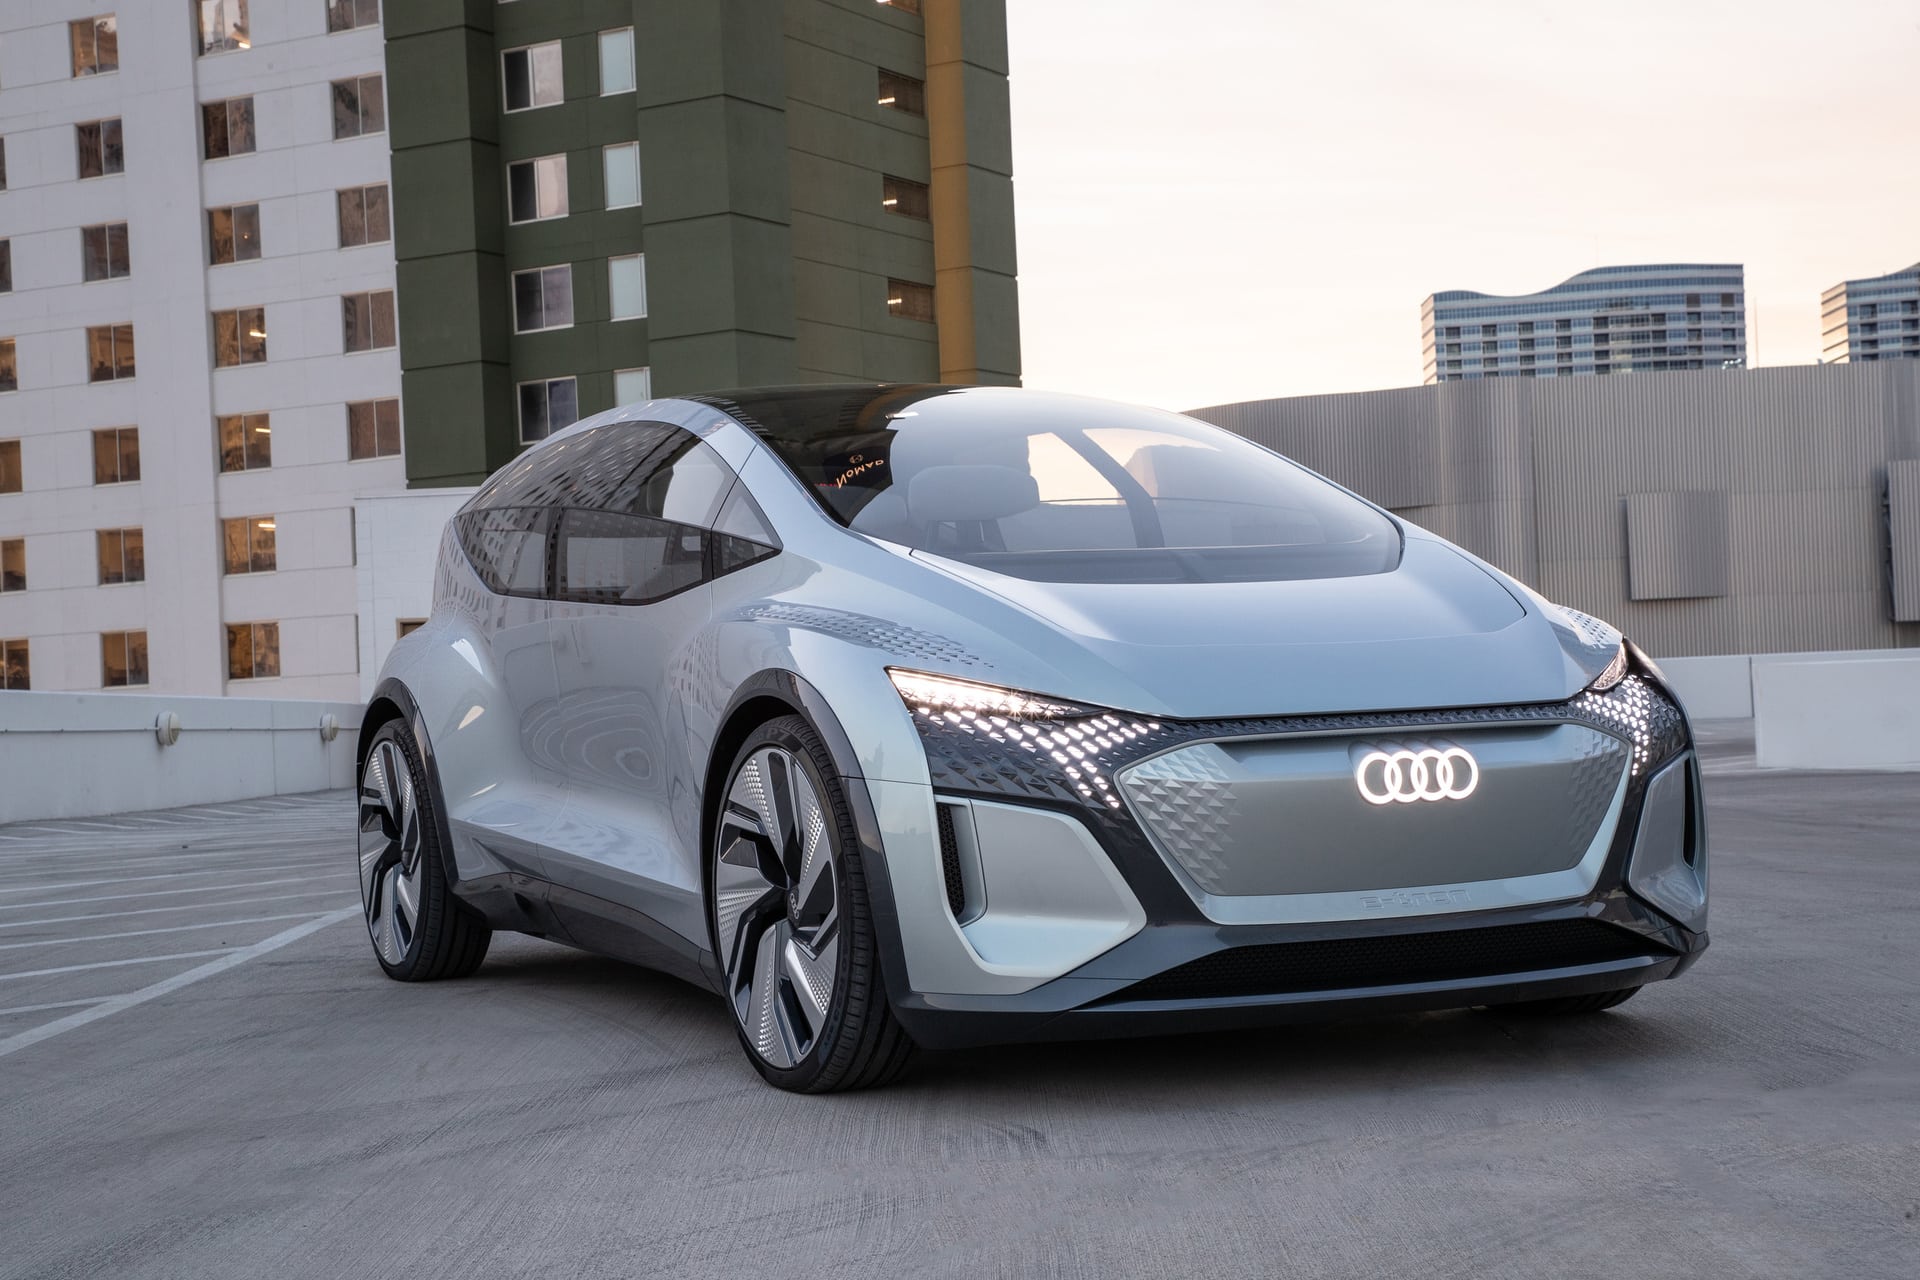 Audi is showing an autonomous driving concept car at the Consumer Electronics Show.